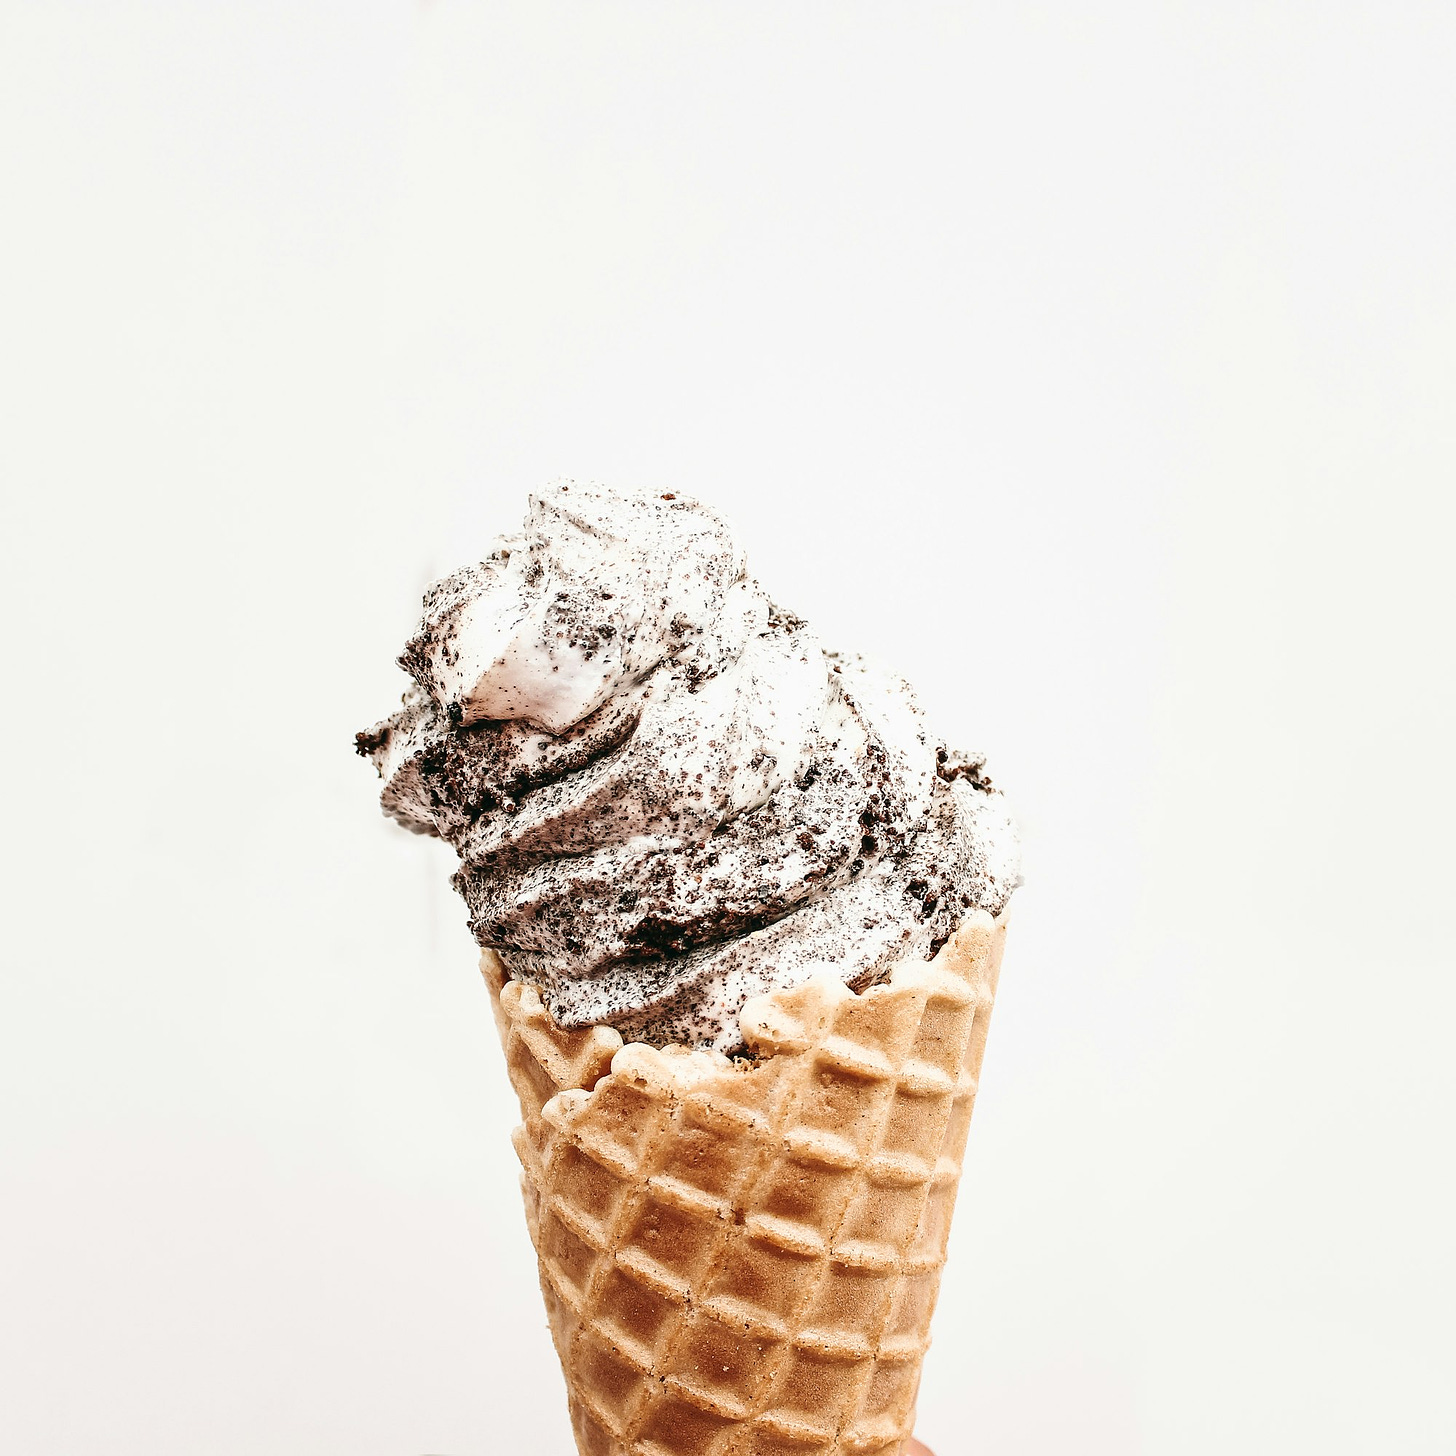 Cookies and Cream Ice cream 

Credit instagram : @iceeedc